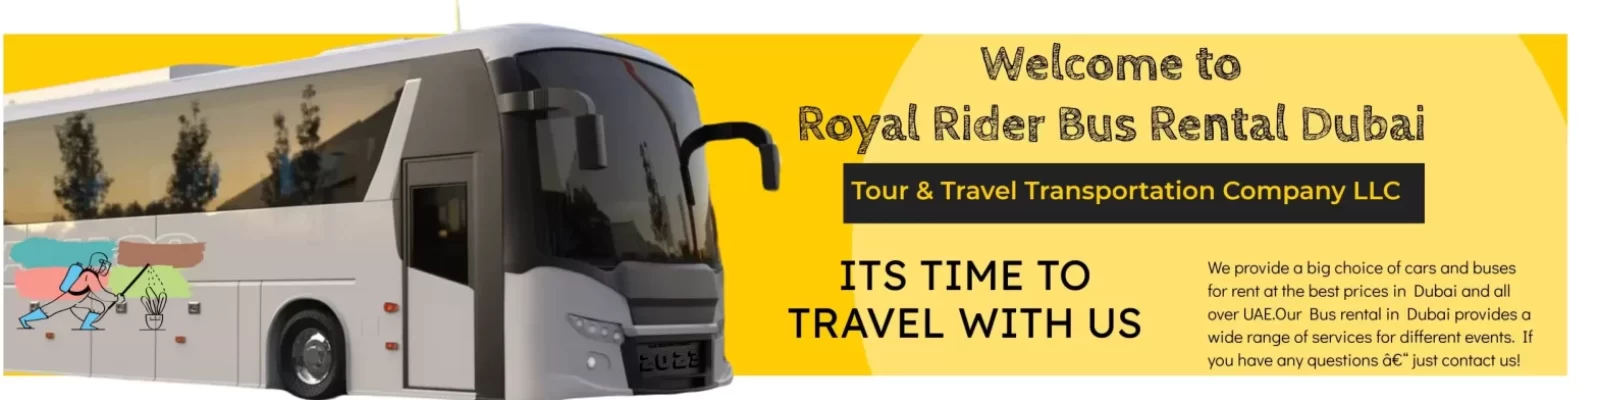 cropped cropped royal rider bus rental dubai welcom scaled 1